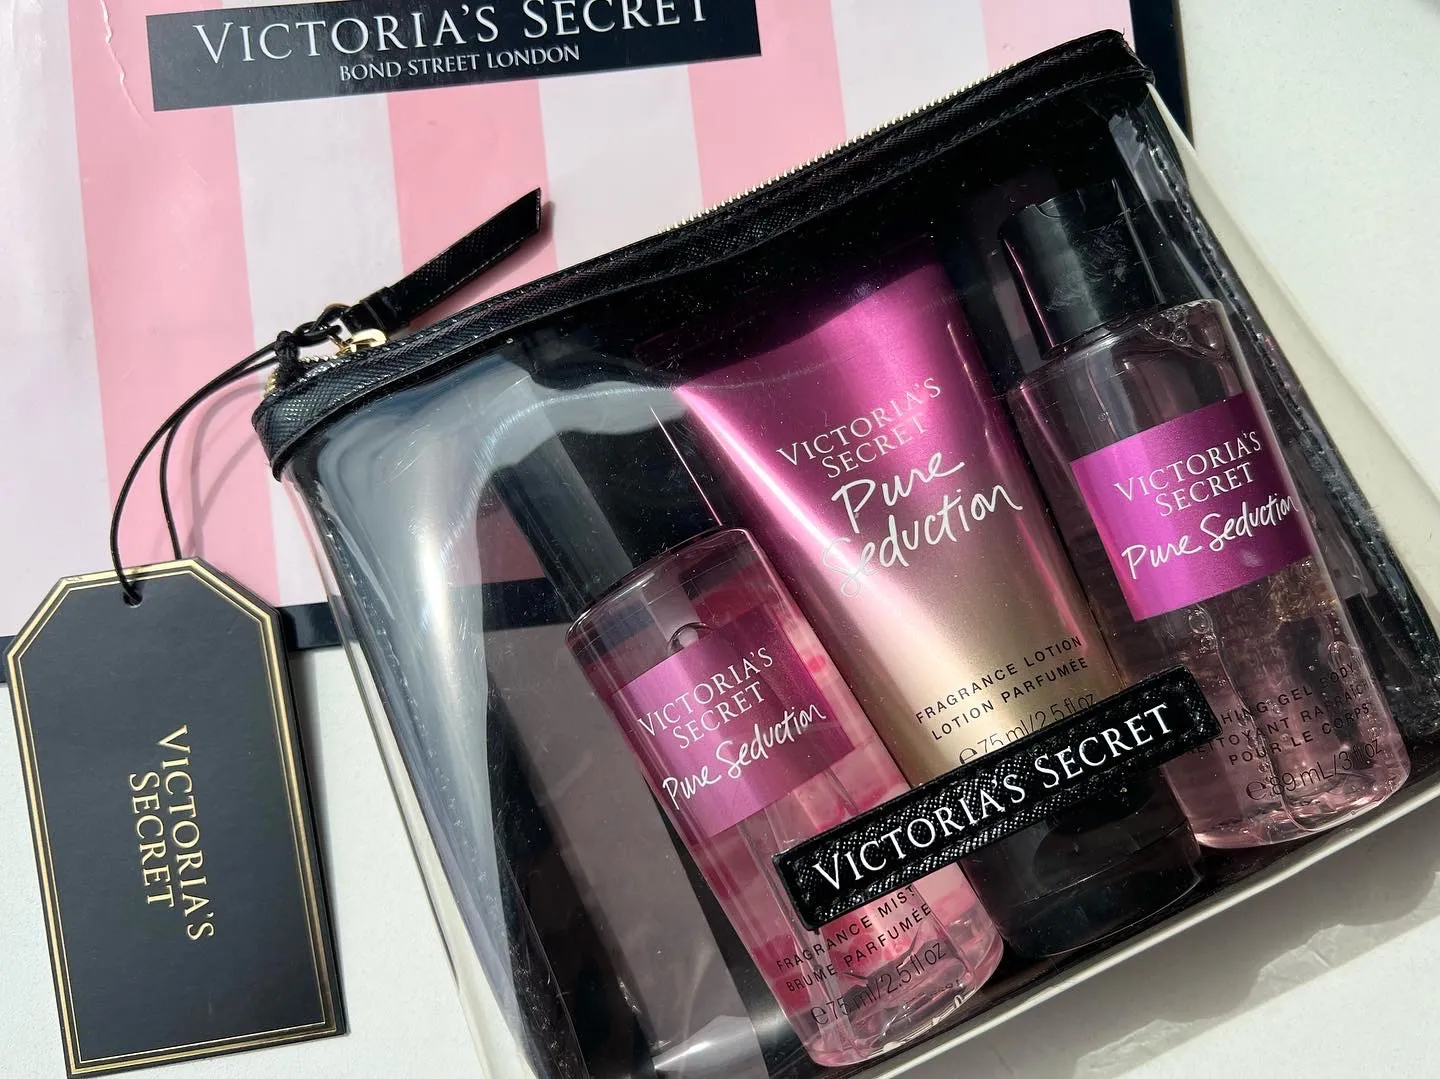 Kit Victoria's Secret Pure seduction body splash 75ml + creme